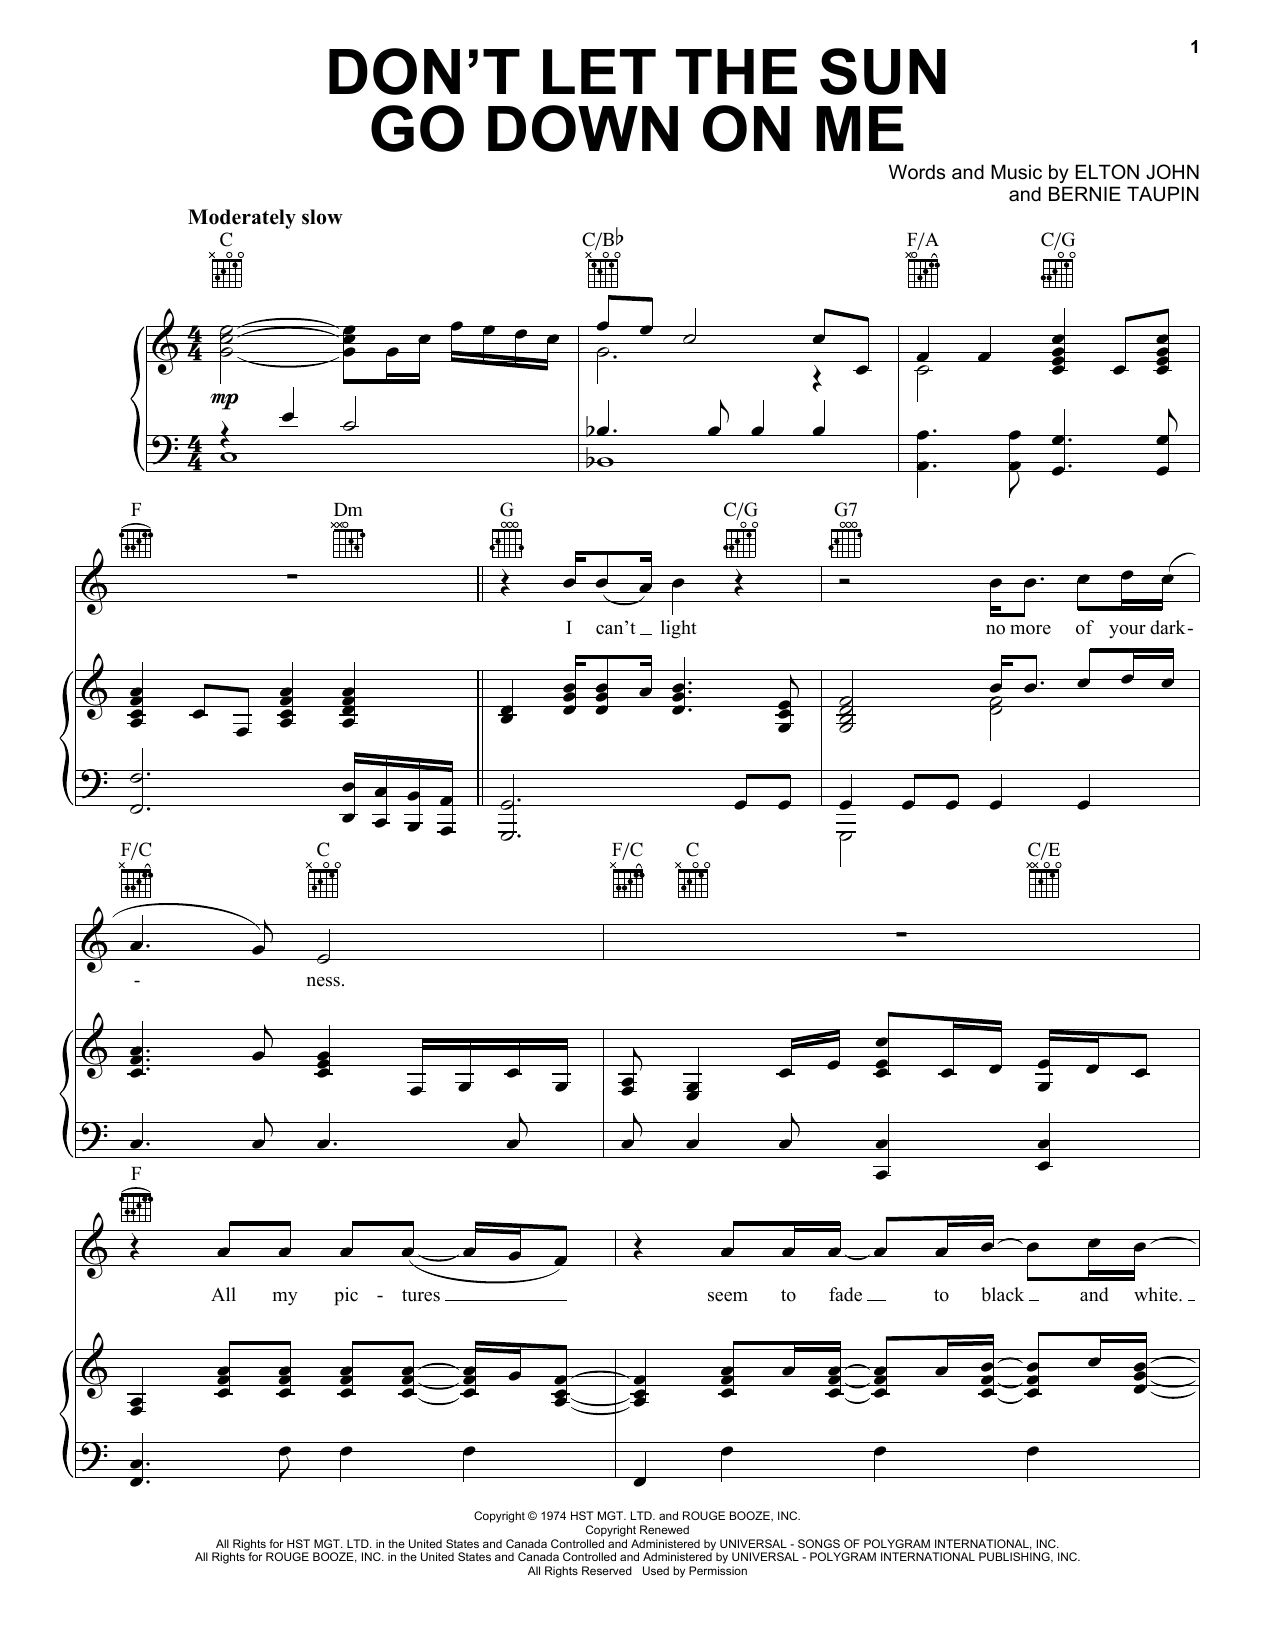 Elton John Don't Let The Sun Go Down On Me Sheet Music Notes & Chords for Ukulele - Download or Print PDF